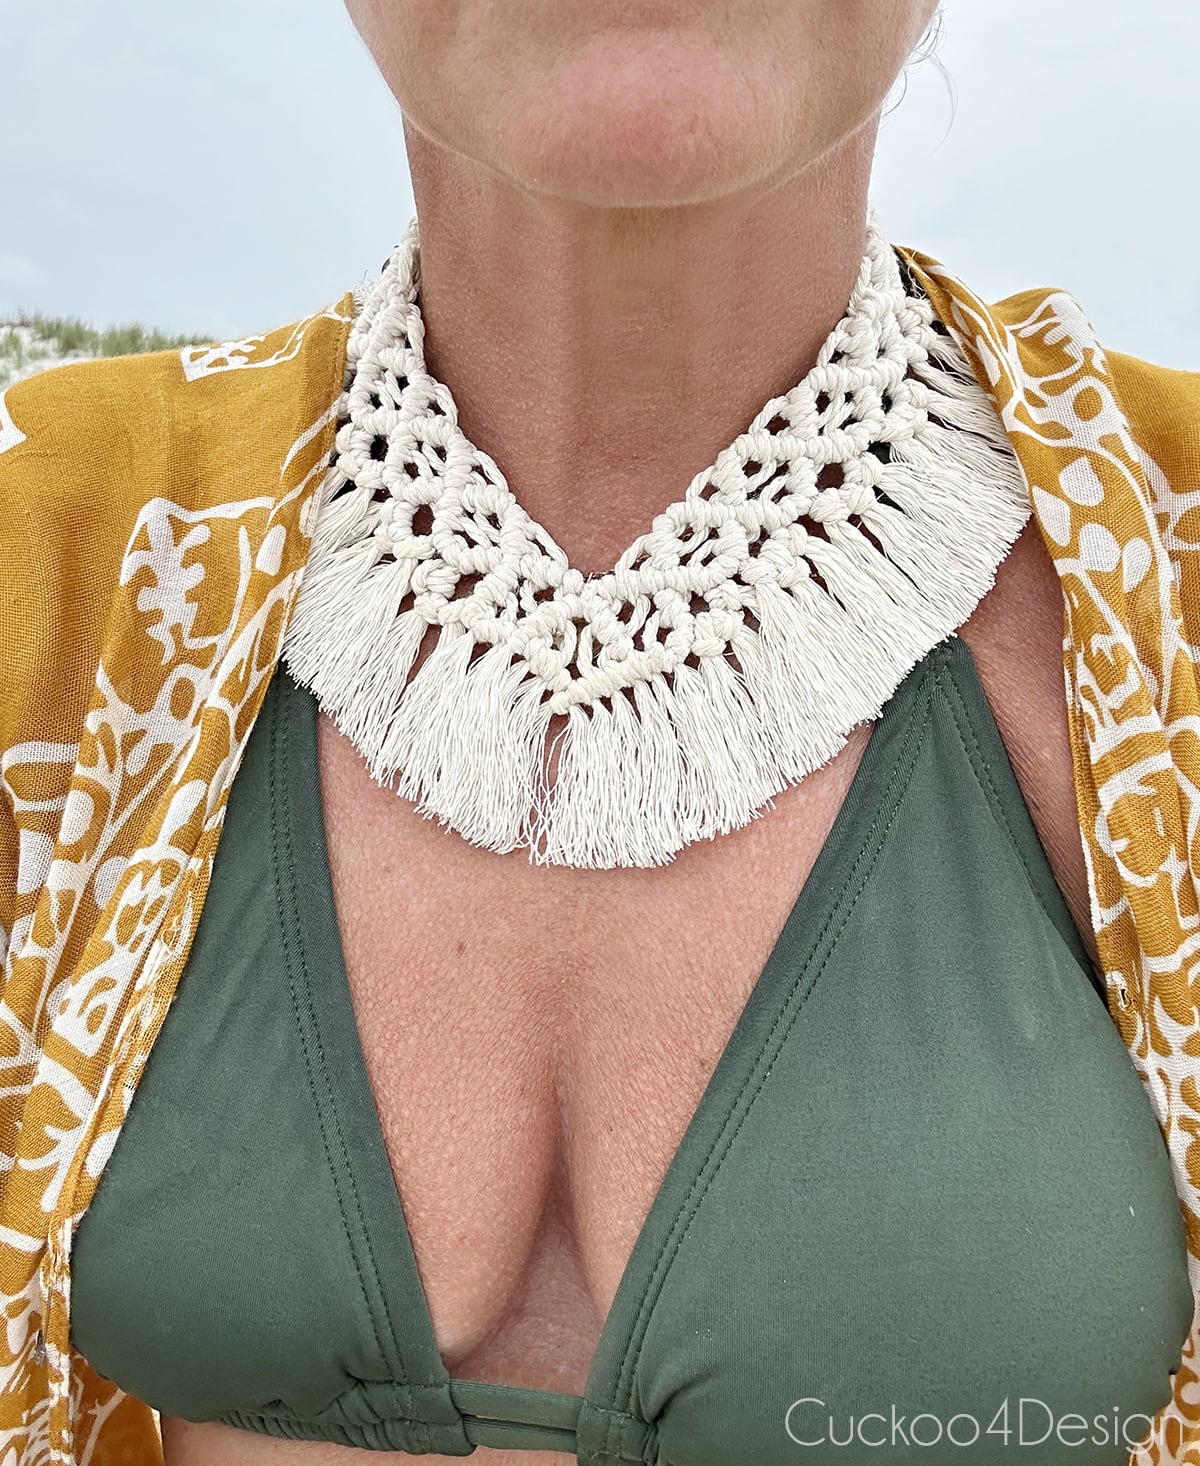 wearing an ivory macrame necklace and bikini